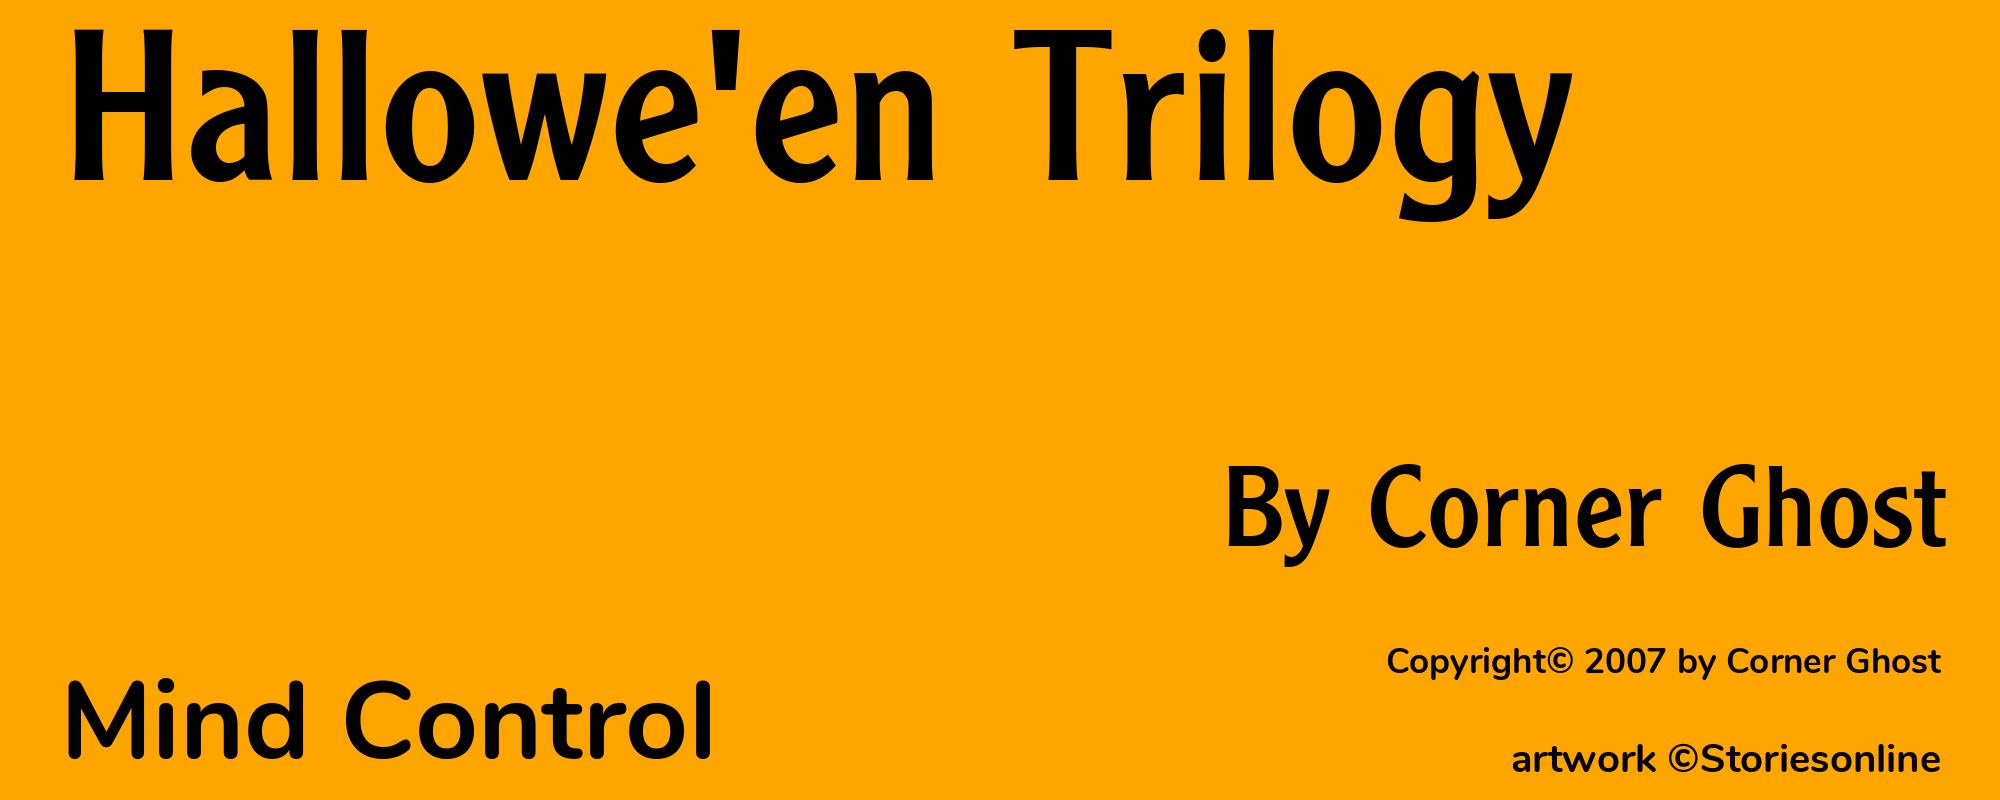 Hallowe'en Trilogy - Cover